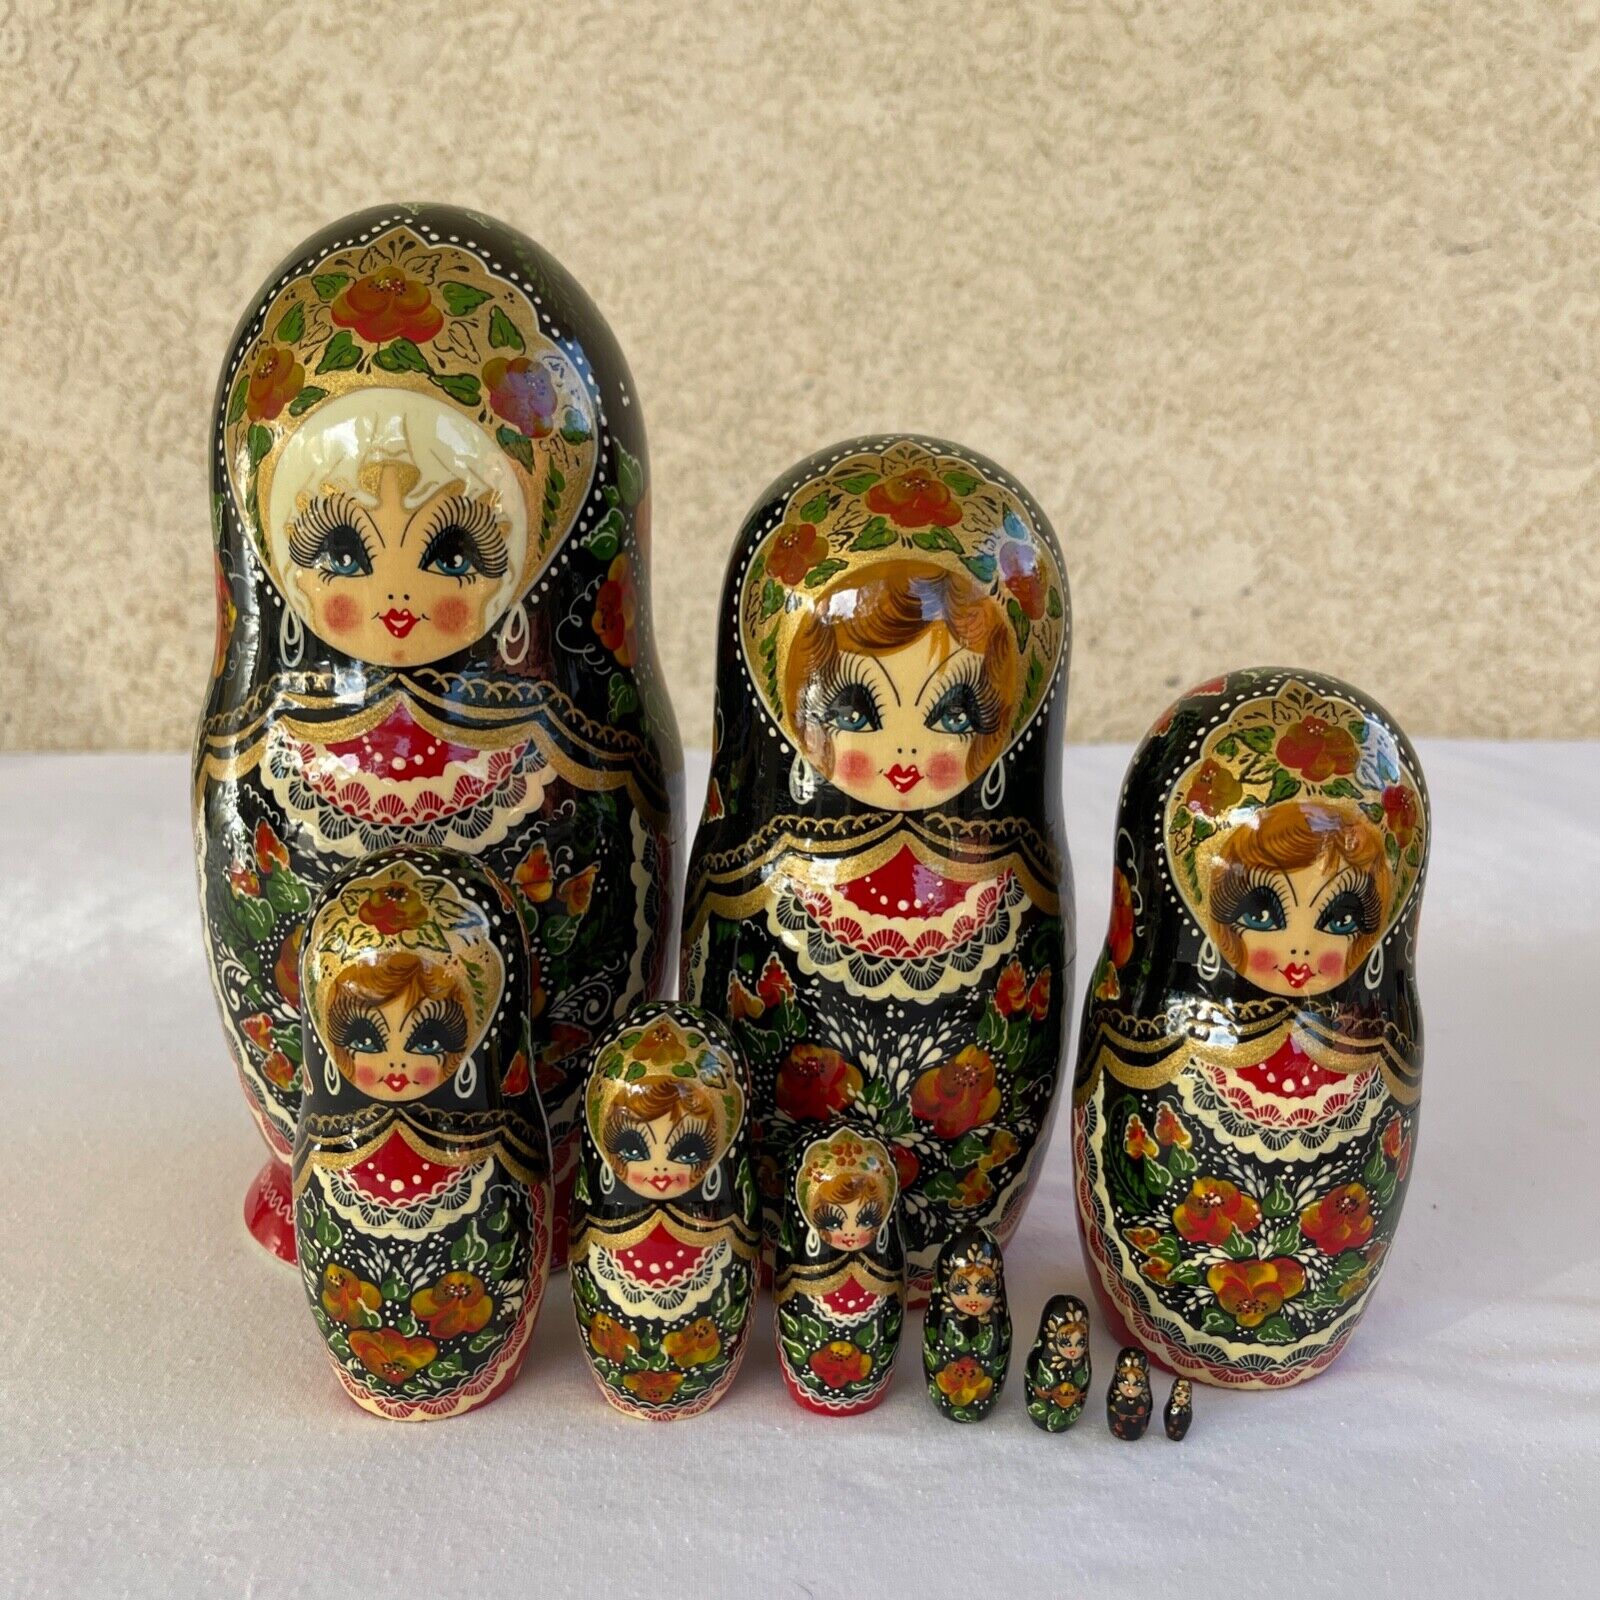 10 Pc VTG Signed CEPRUEB NOCAG Hand Painted Russian Matryoshka Nesting Dolls 7”